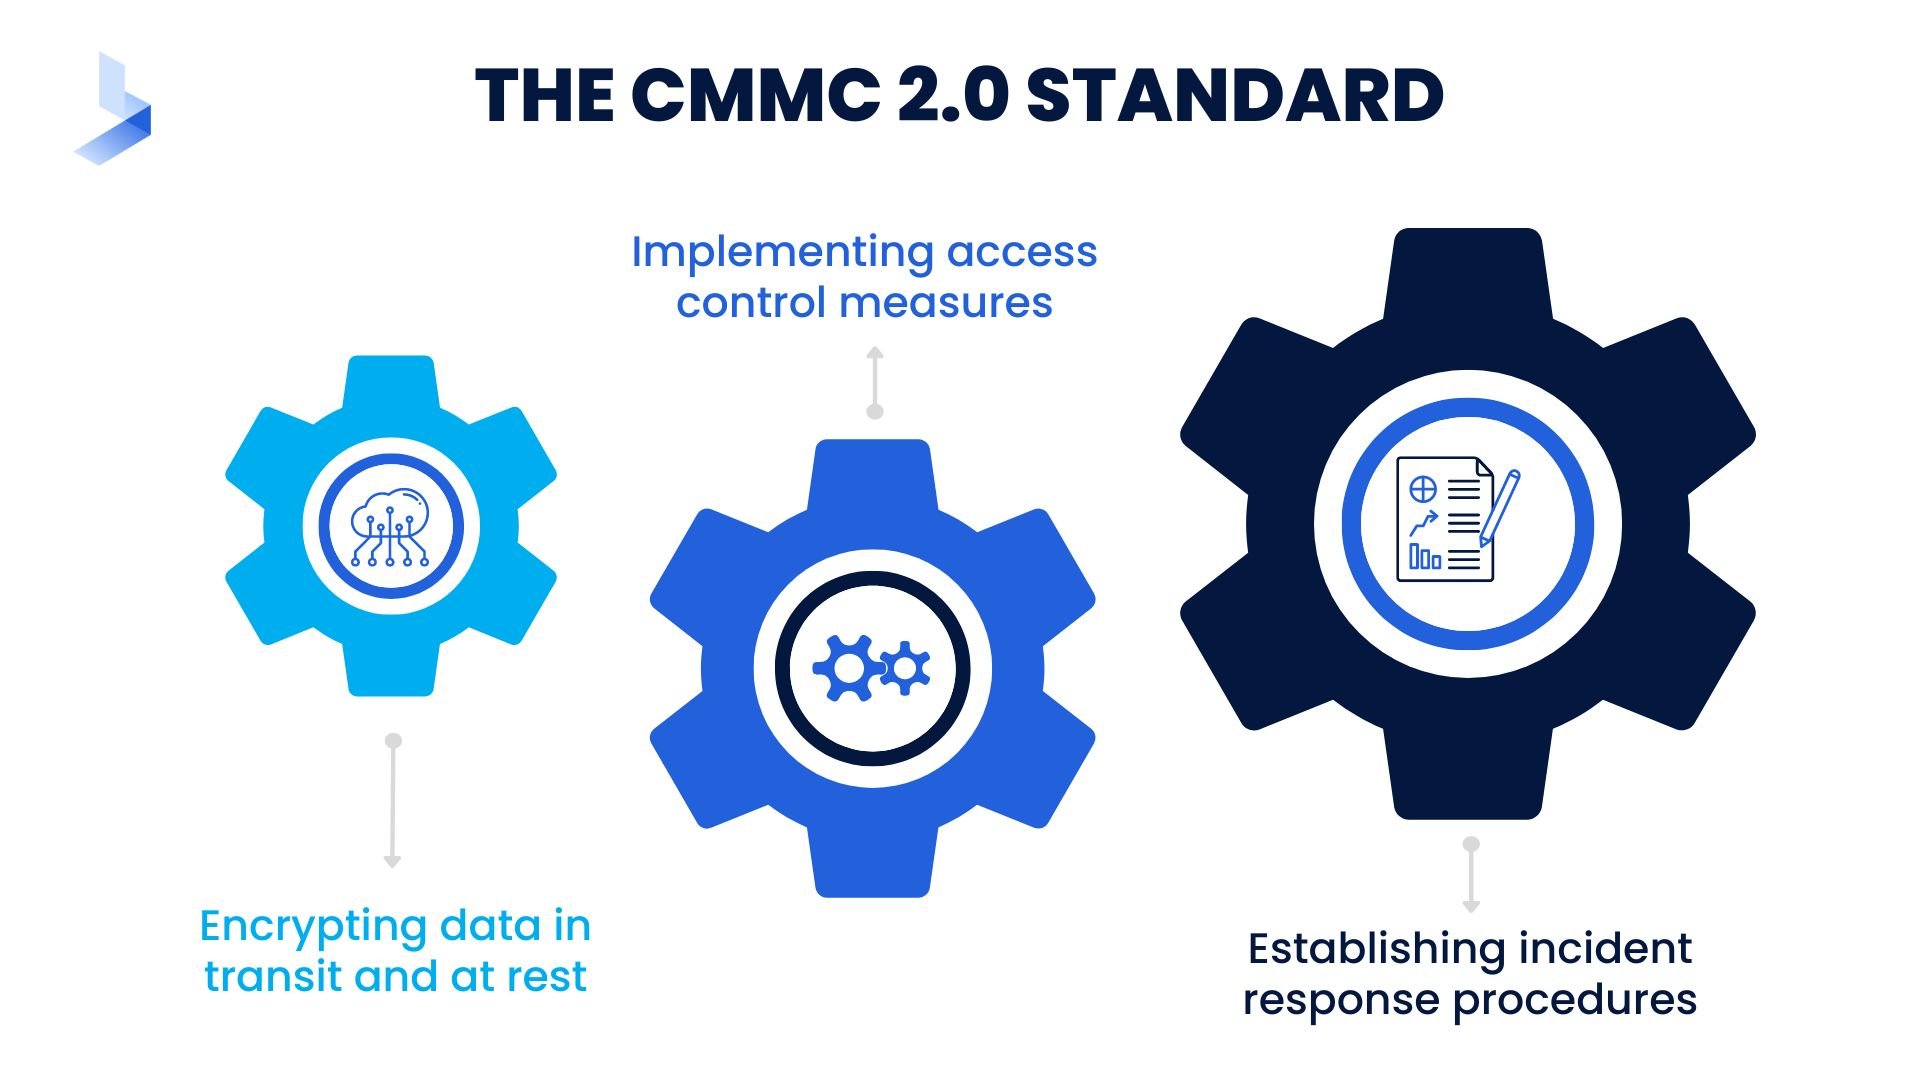 The CMMC 2.0 Standard